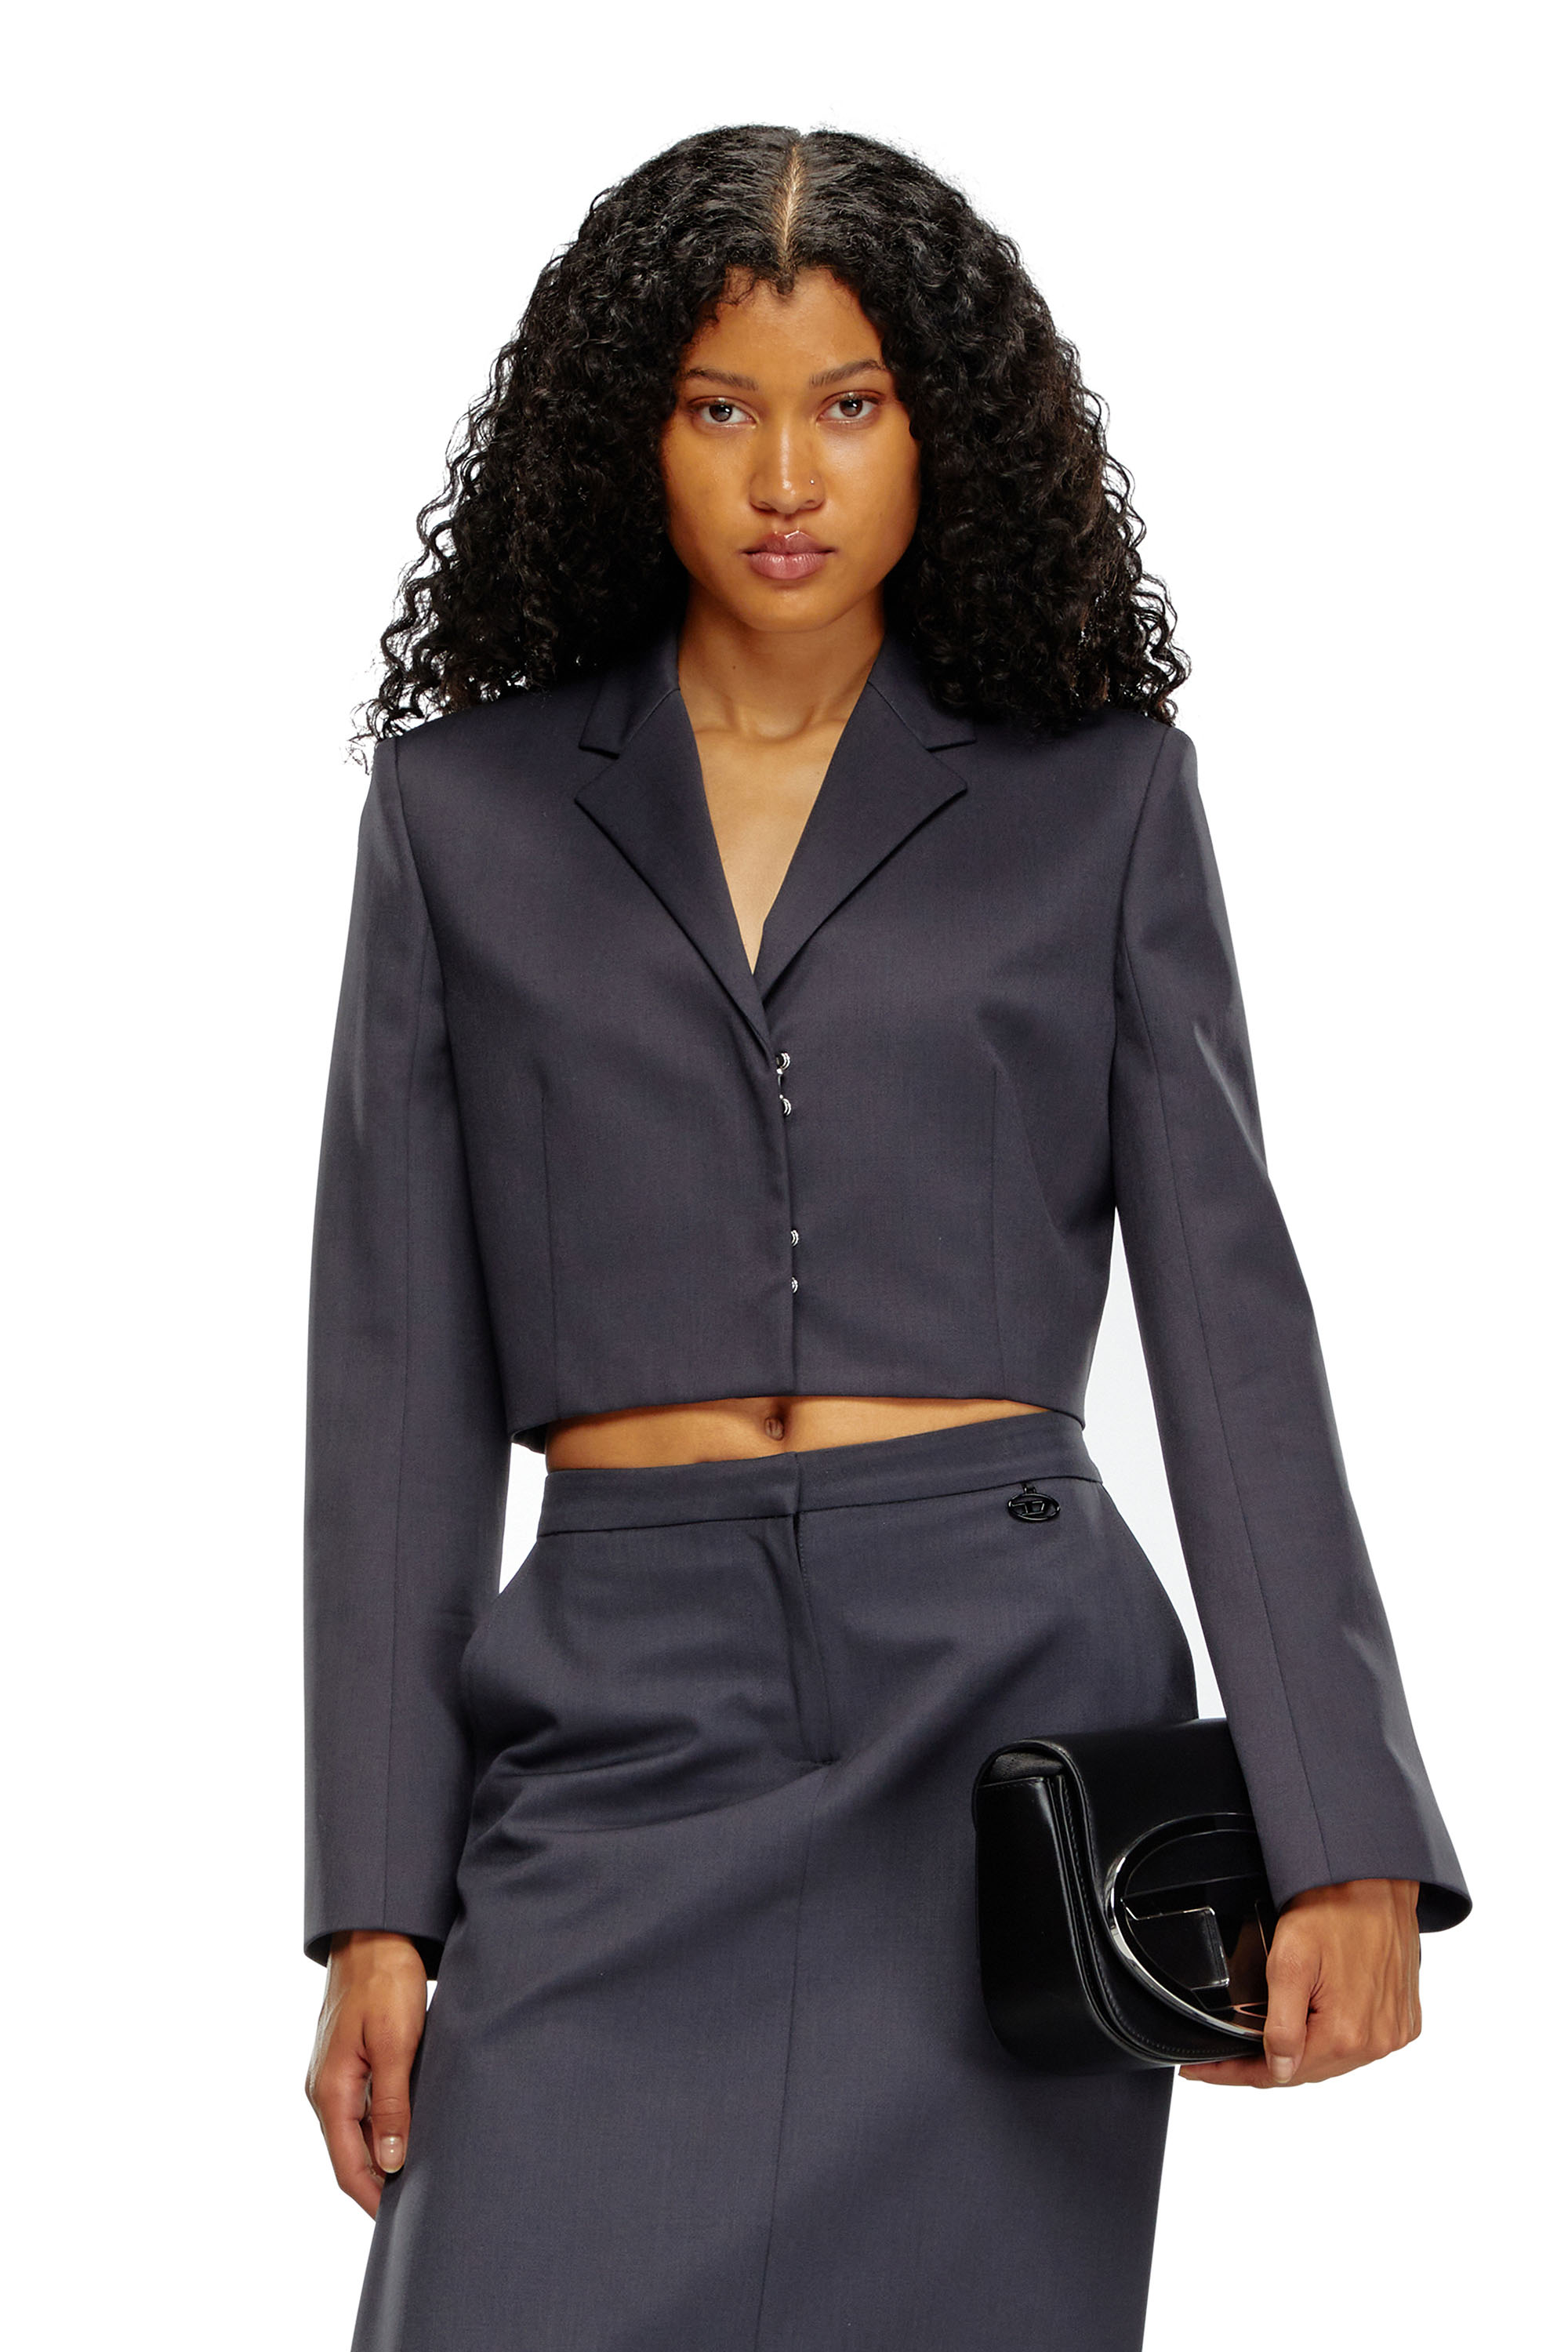 Diesel - G-MILLA-P1, Female Cropped blazer in stretch wool blend in グレー - Image 1